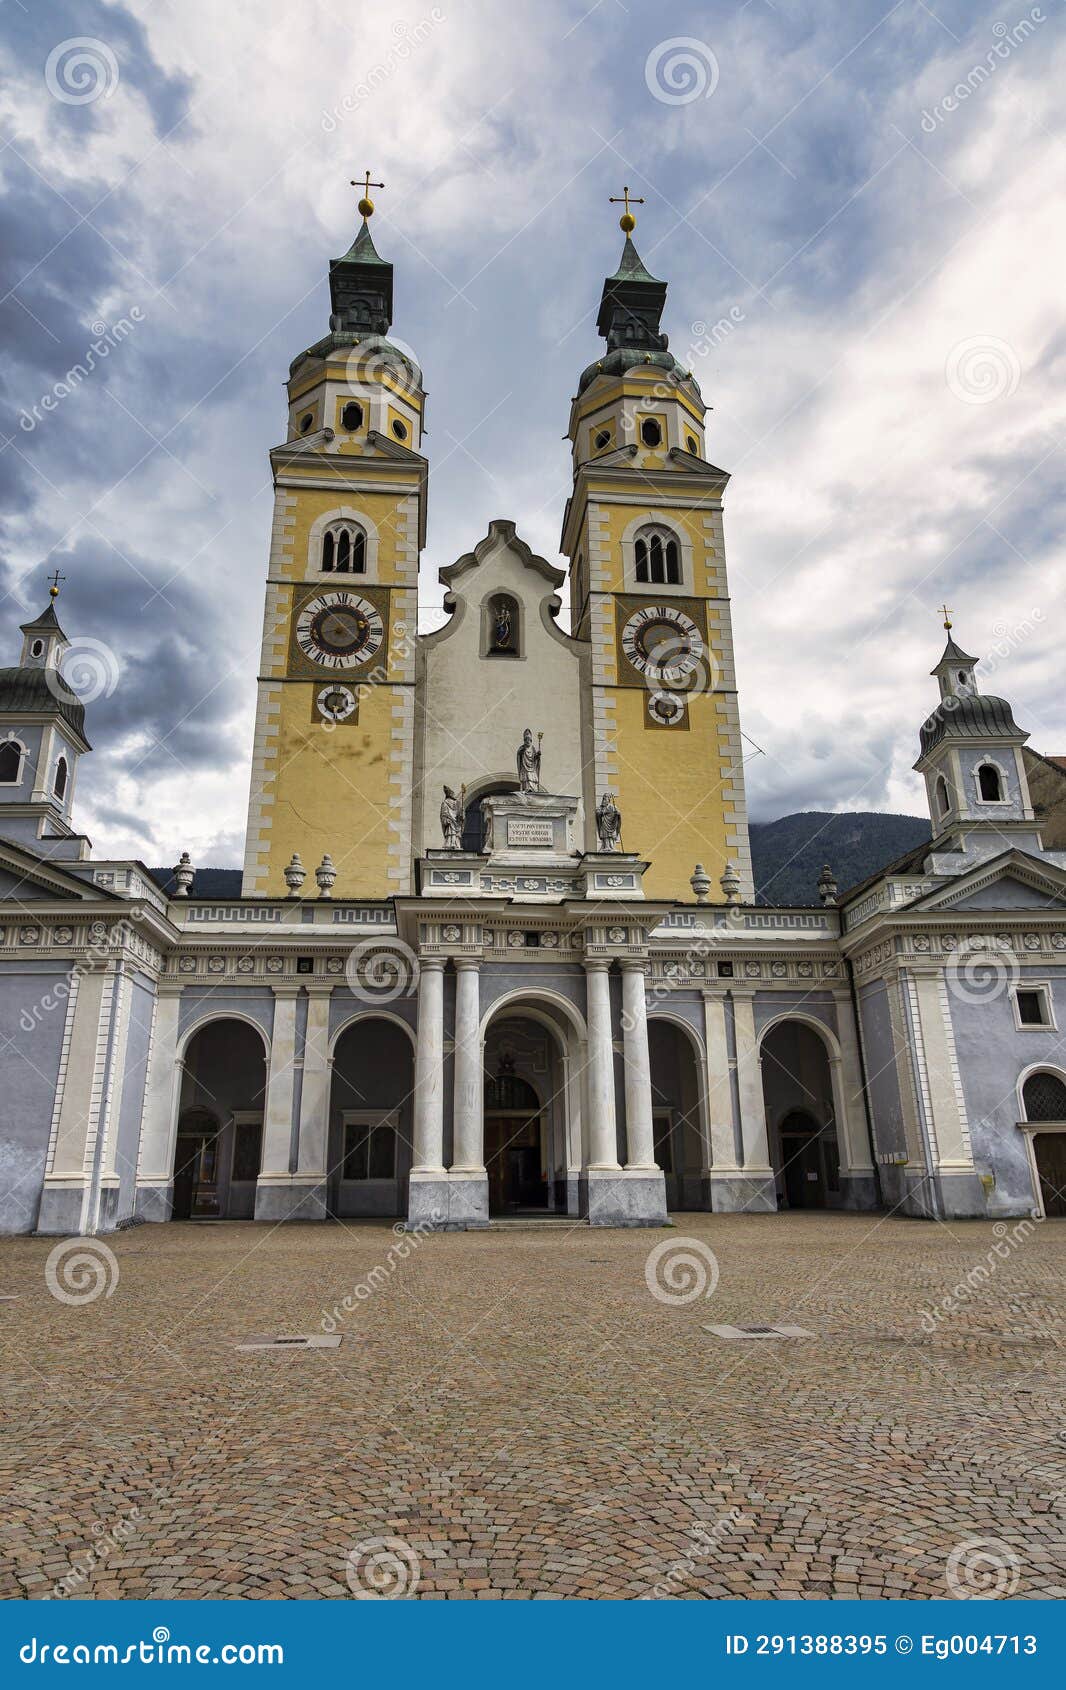 cathedral of santa maria assunta in brixen, italy